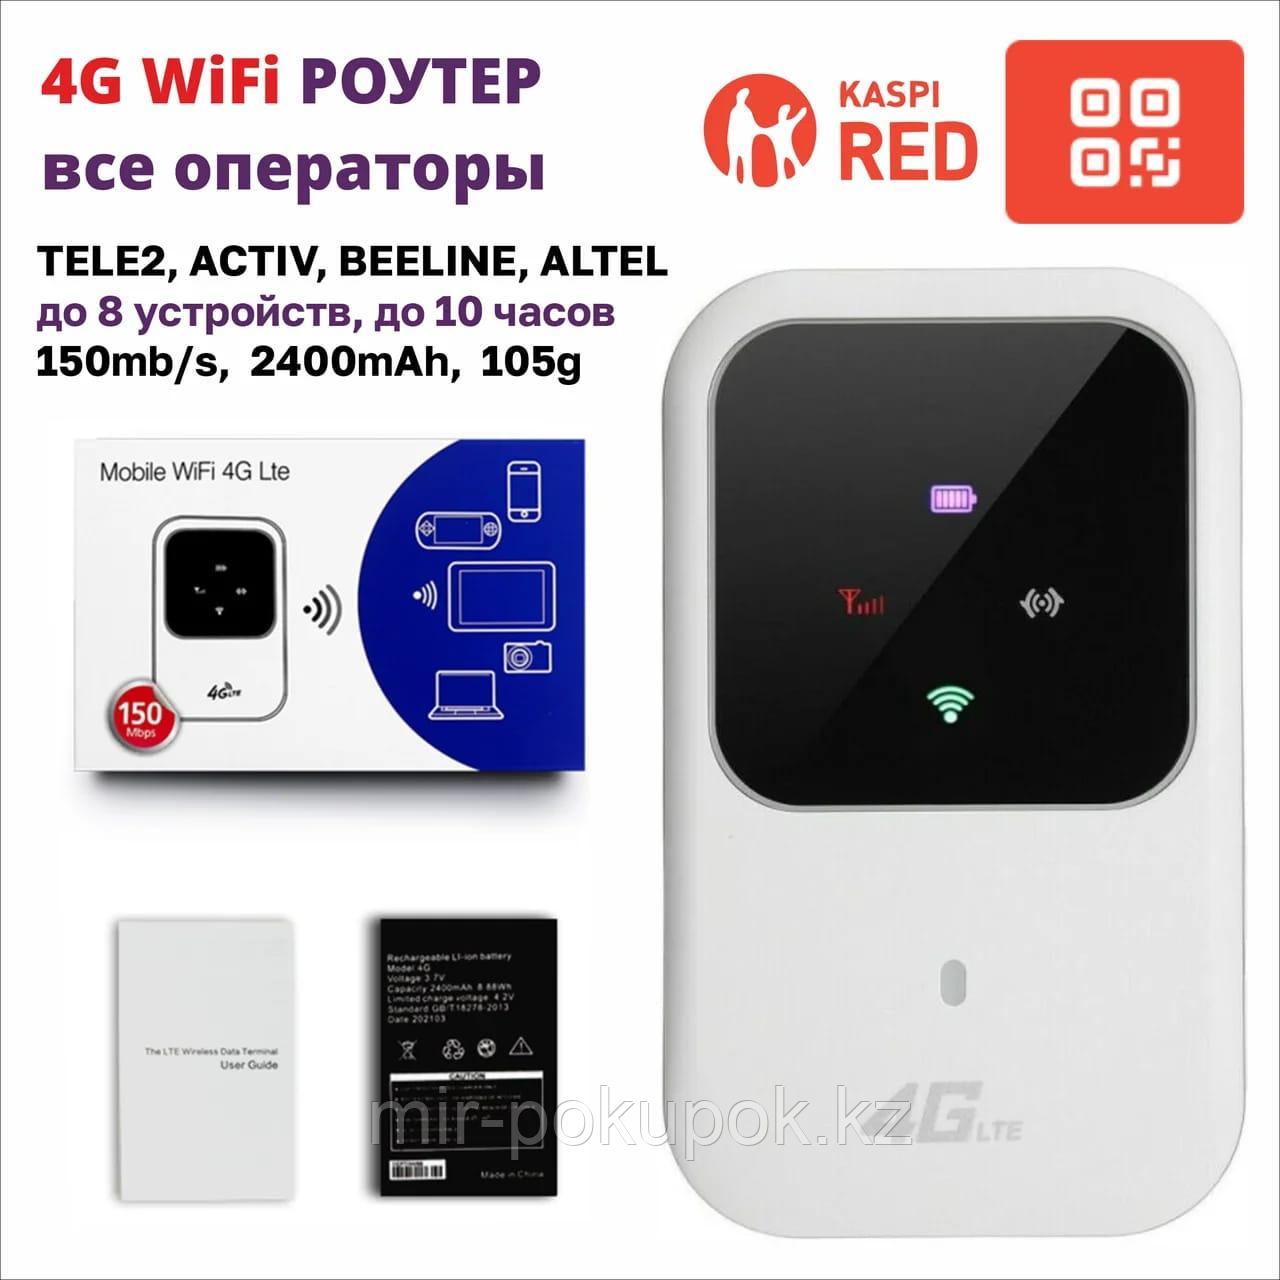 Модем 4G 3G LTE WiFi роутер беспроводной 150 мб/с SIM карты СИМ Tele2 Билайн Актив Kcell Altel